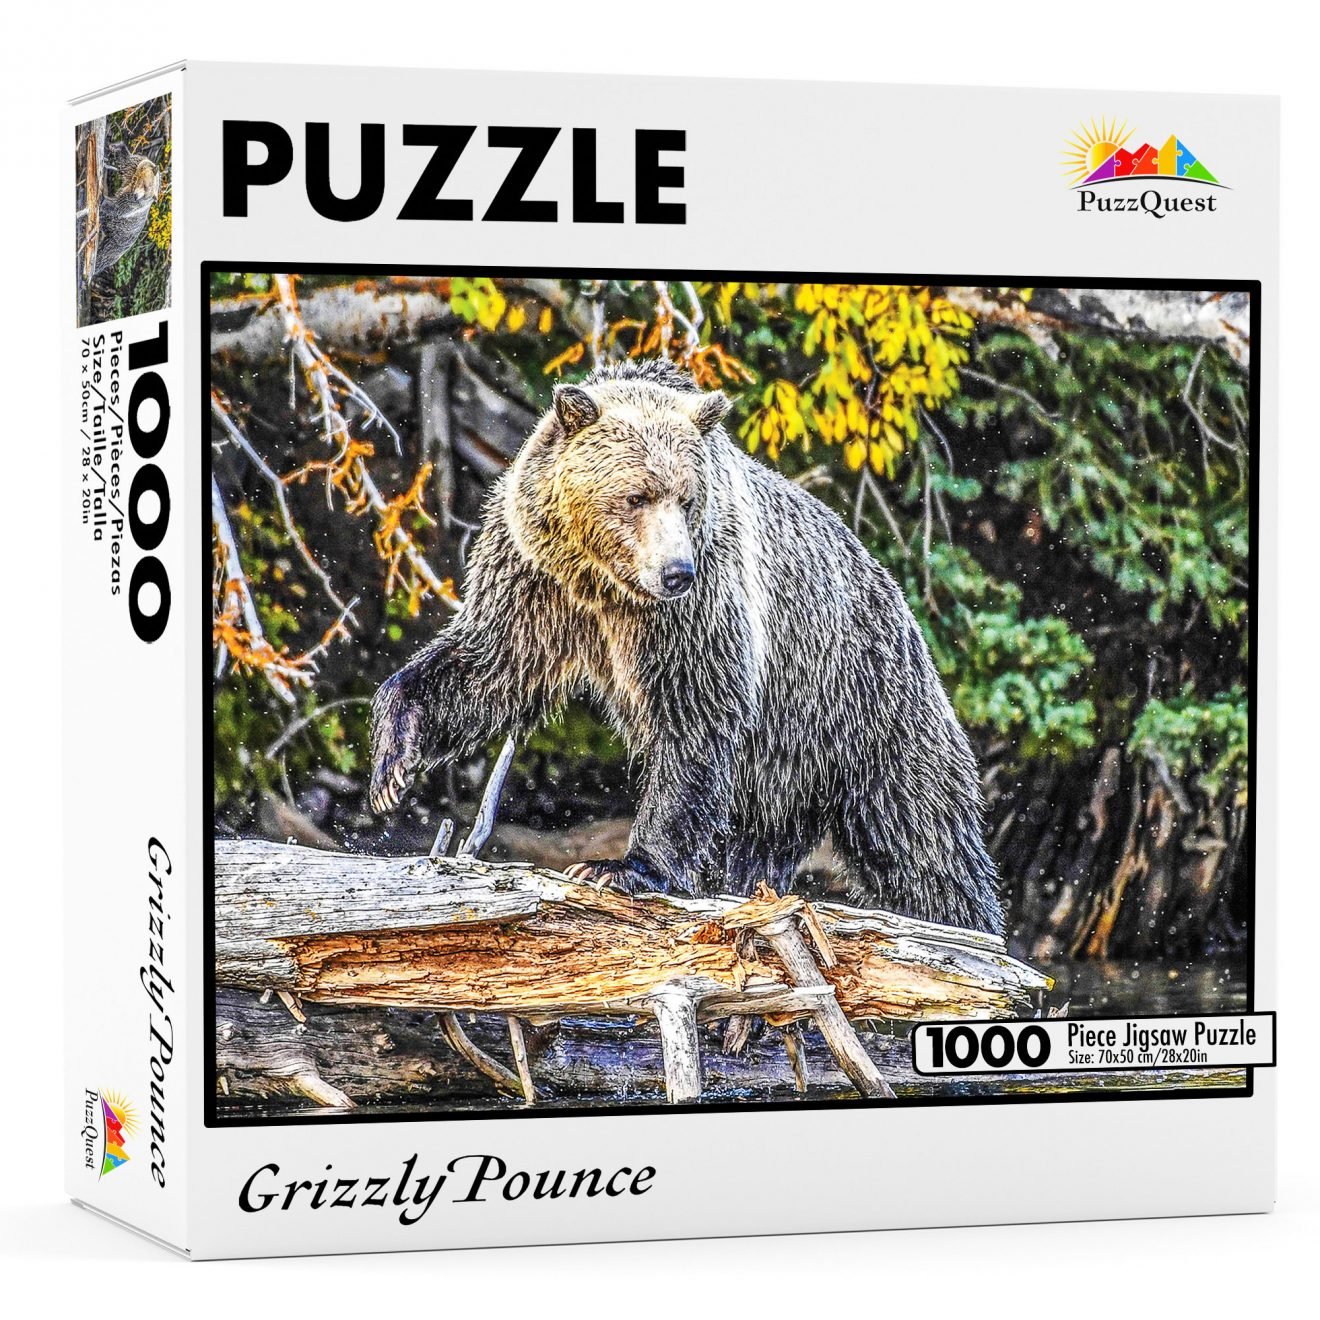 Grizzly Pounce 1000 piece jigsaw puzzle